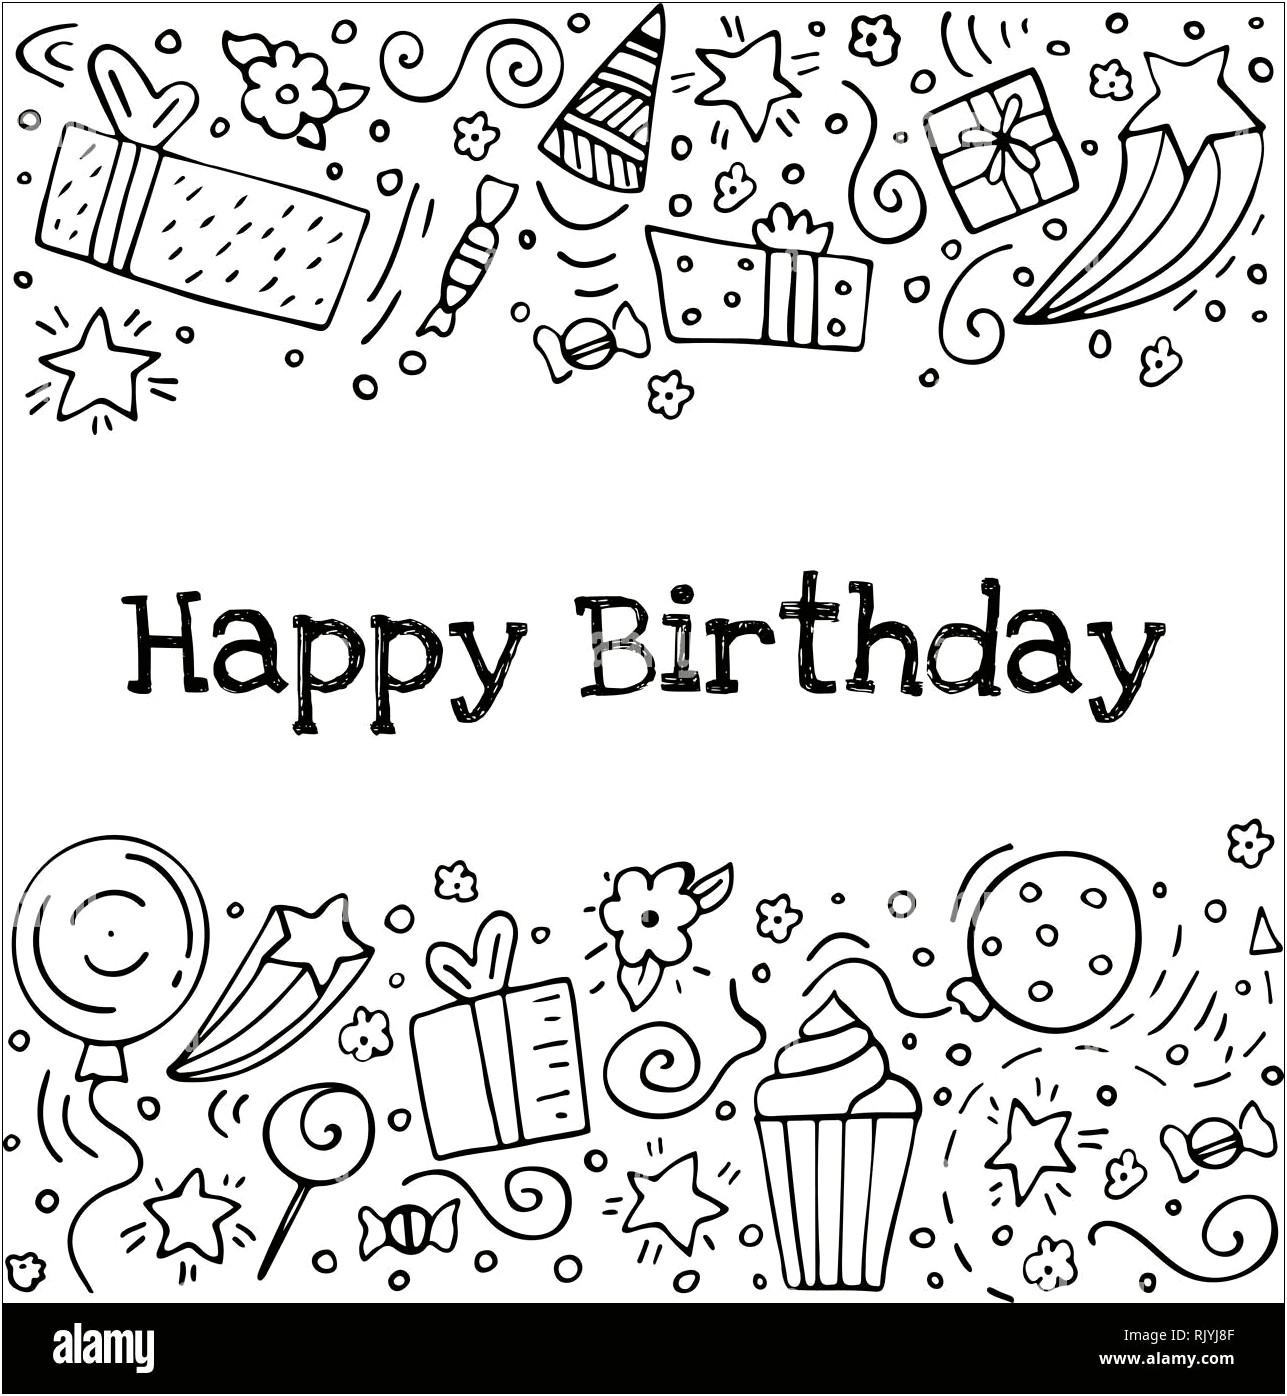 Black N White Birthday Card Template Free